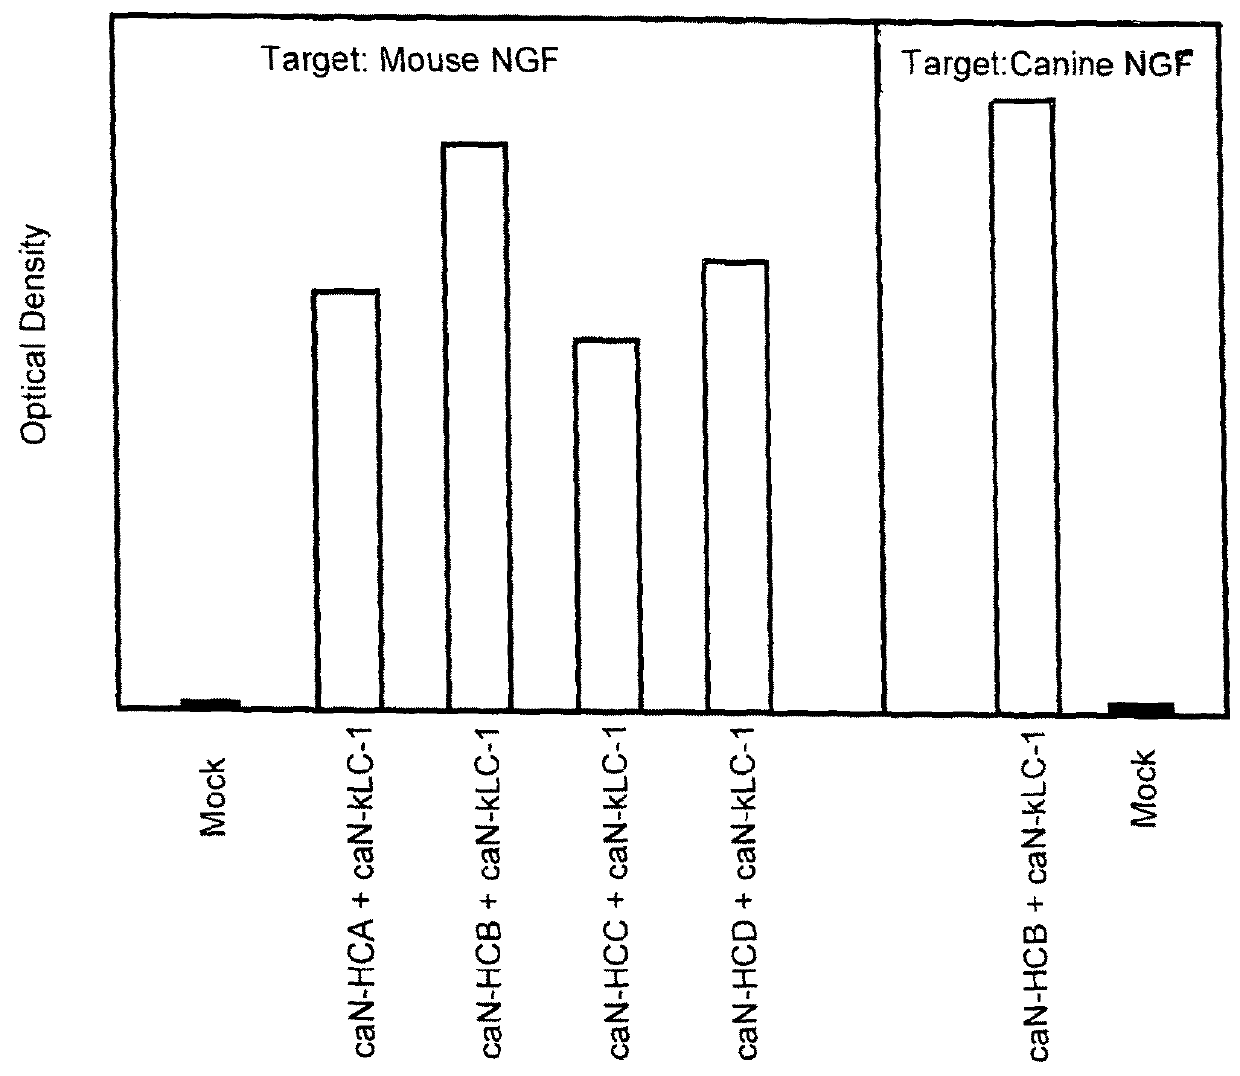 Caninized anti-nerve growth factor antibodies